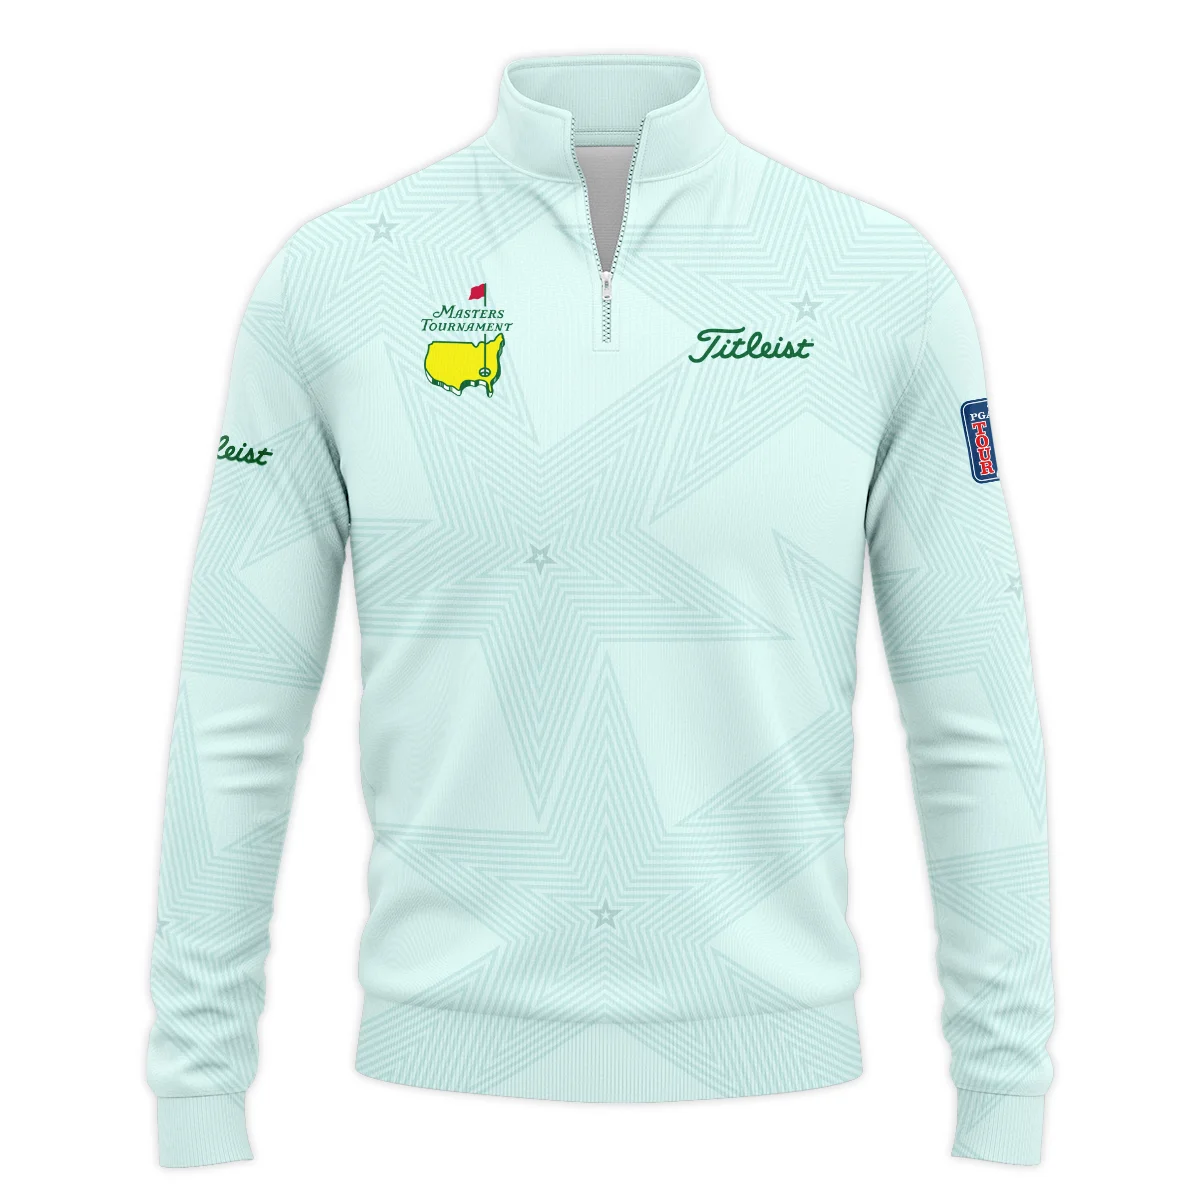 Golf Love Star Light Green Mix Masters Tournament Titlest Zipper Polo Shirt Style Classic